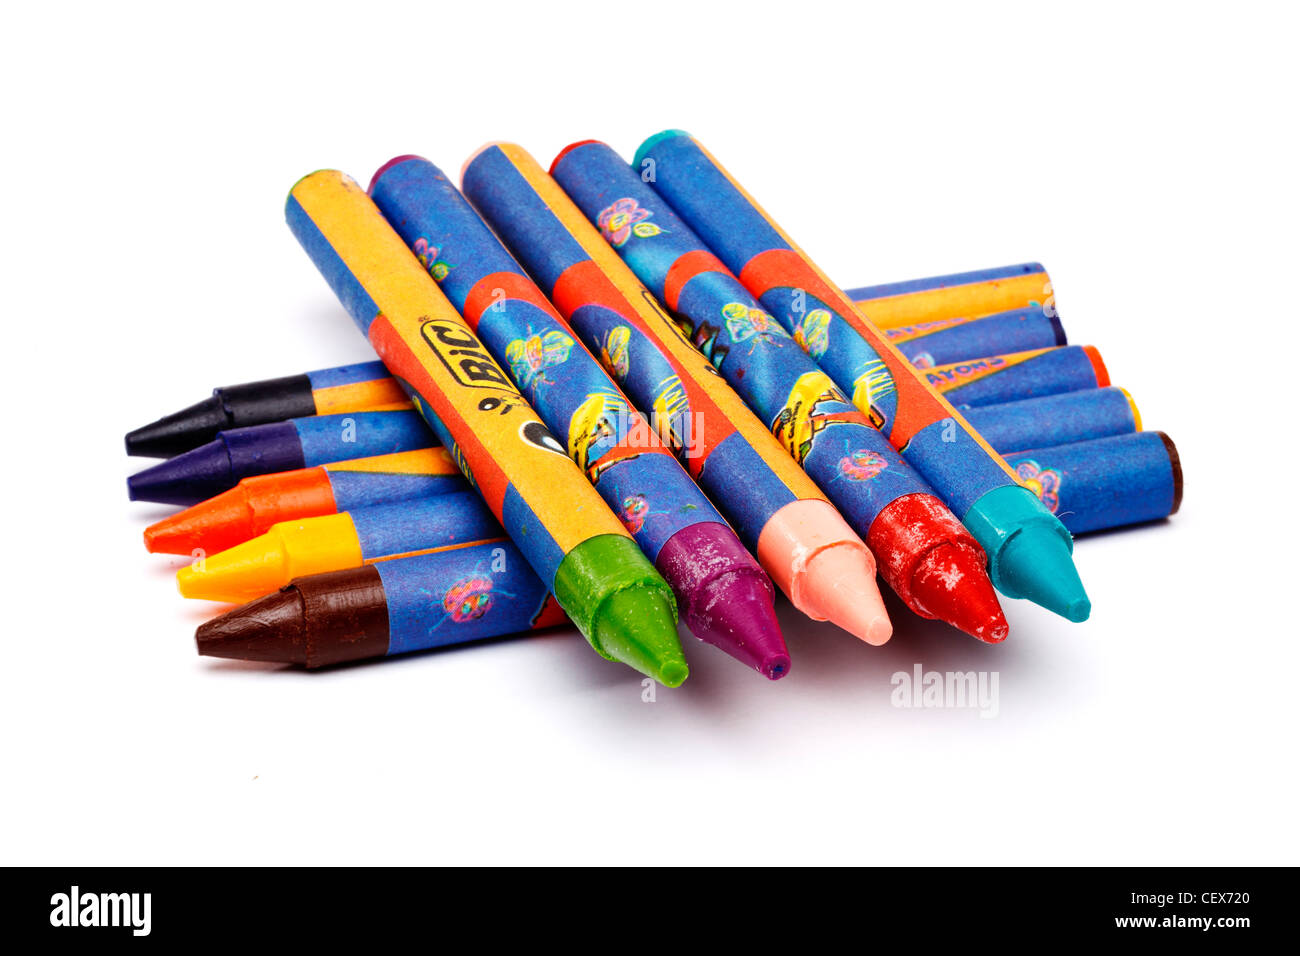 https://c8.alamy.com/comp/CEX720/stack-of-wax-crayons-CEX720.jpg